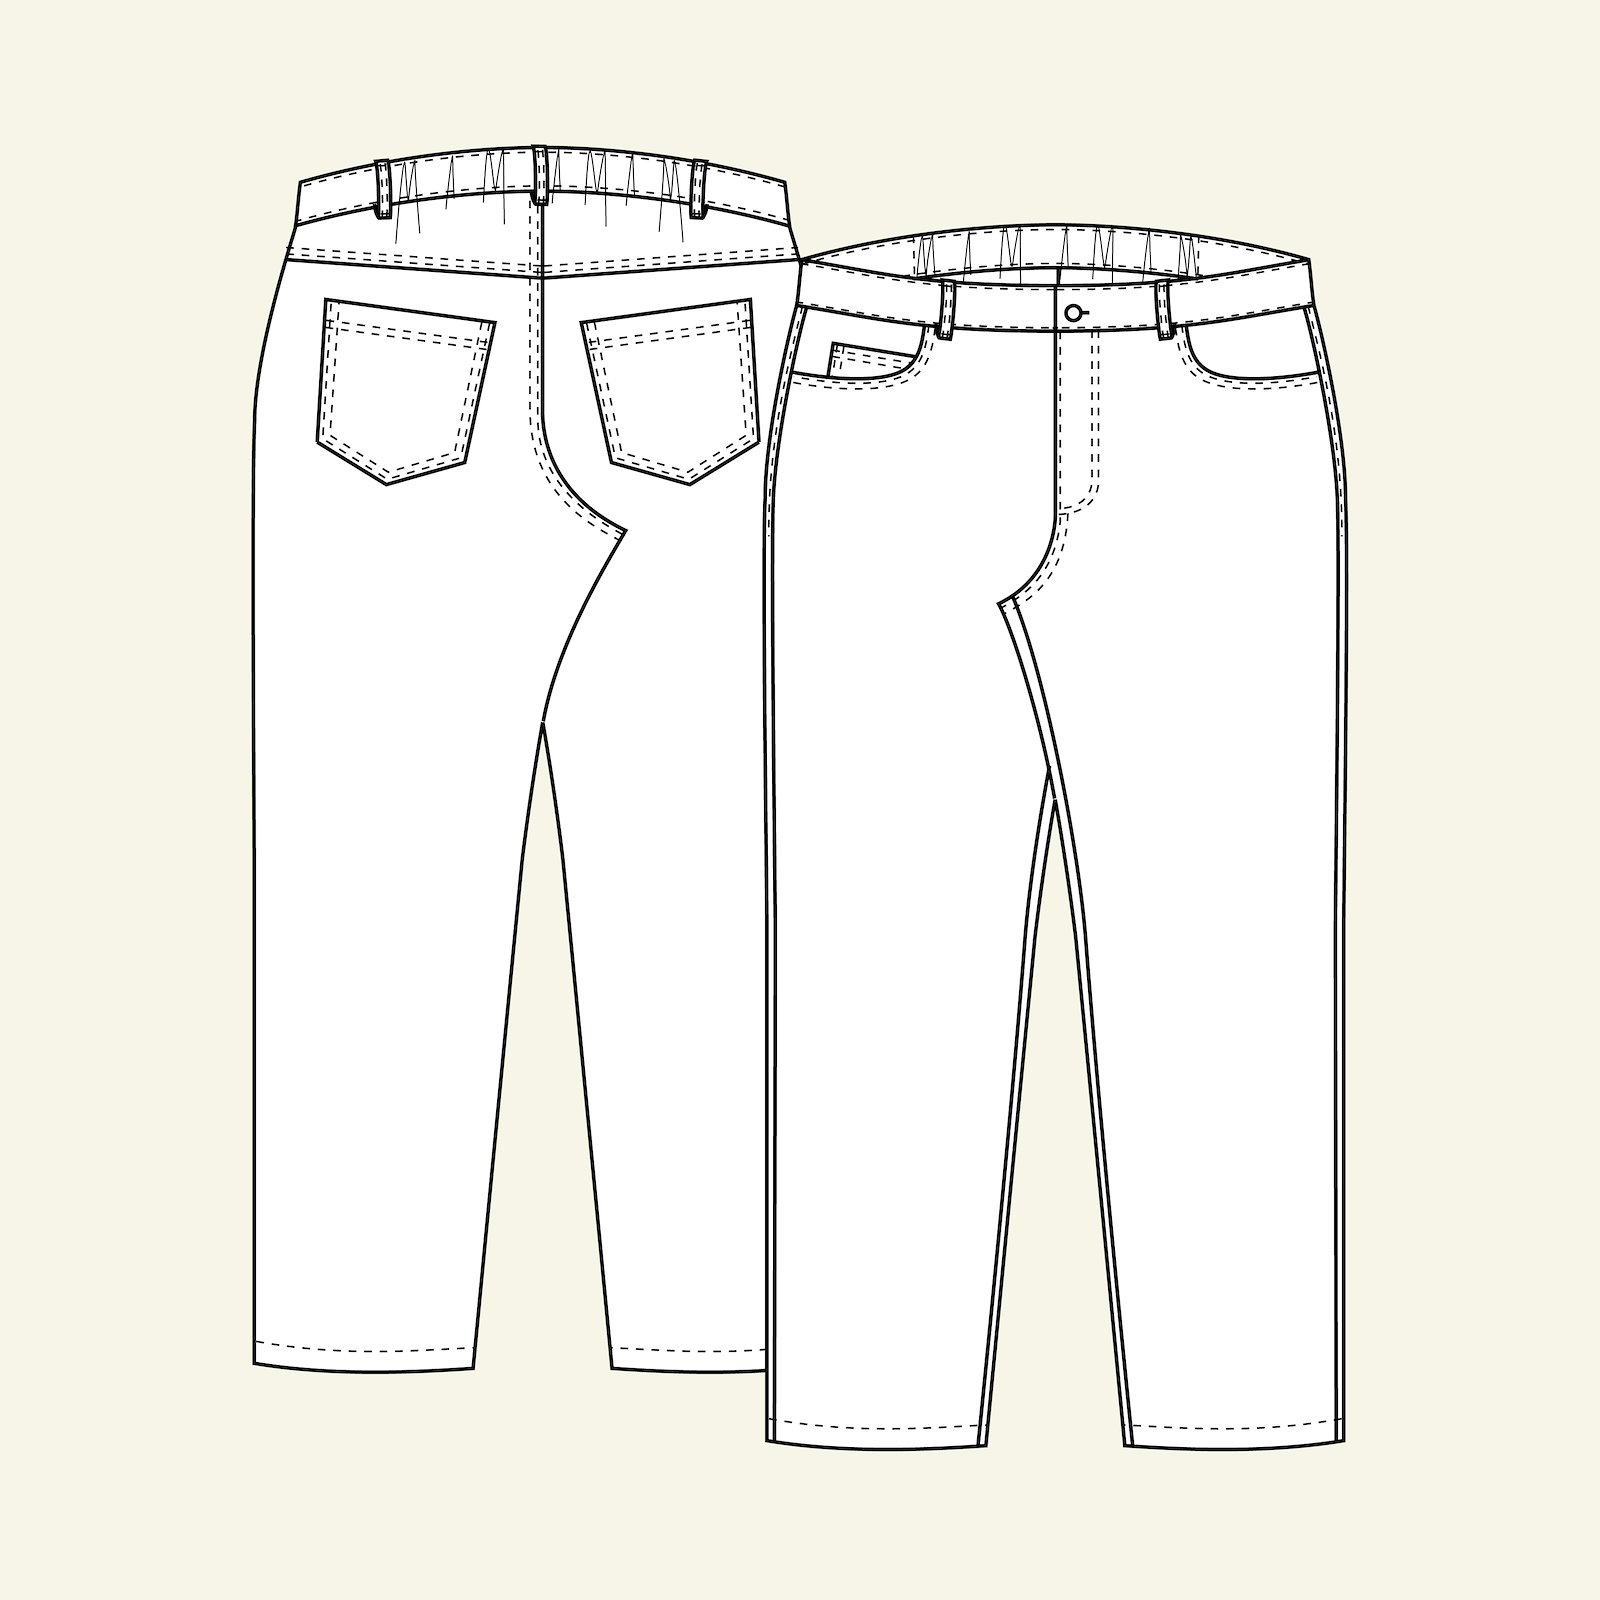 Klassisch Jeans mit Gummiband hintere 46-60 p70007000_p70007001_p70007002_p70007003_p70007004_pack_b